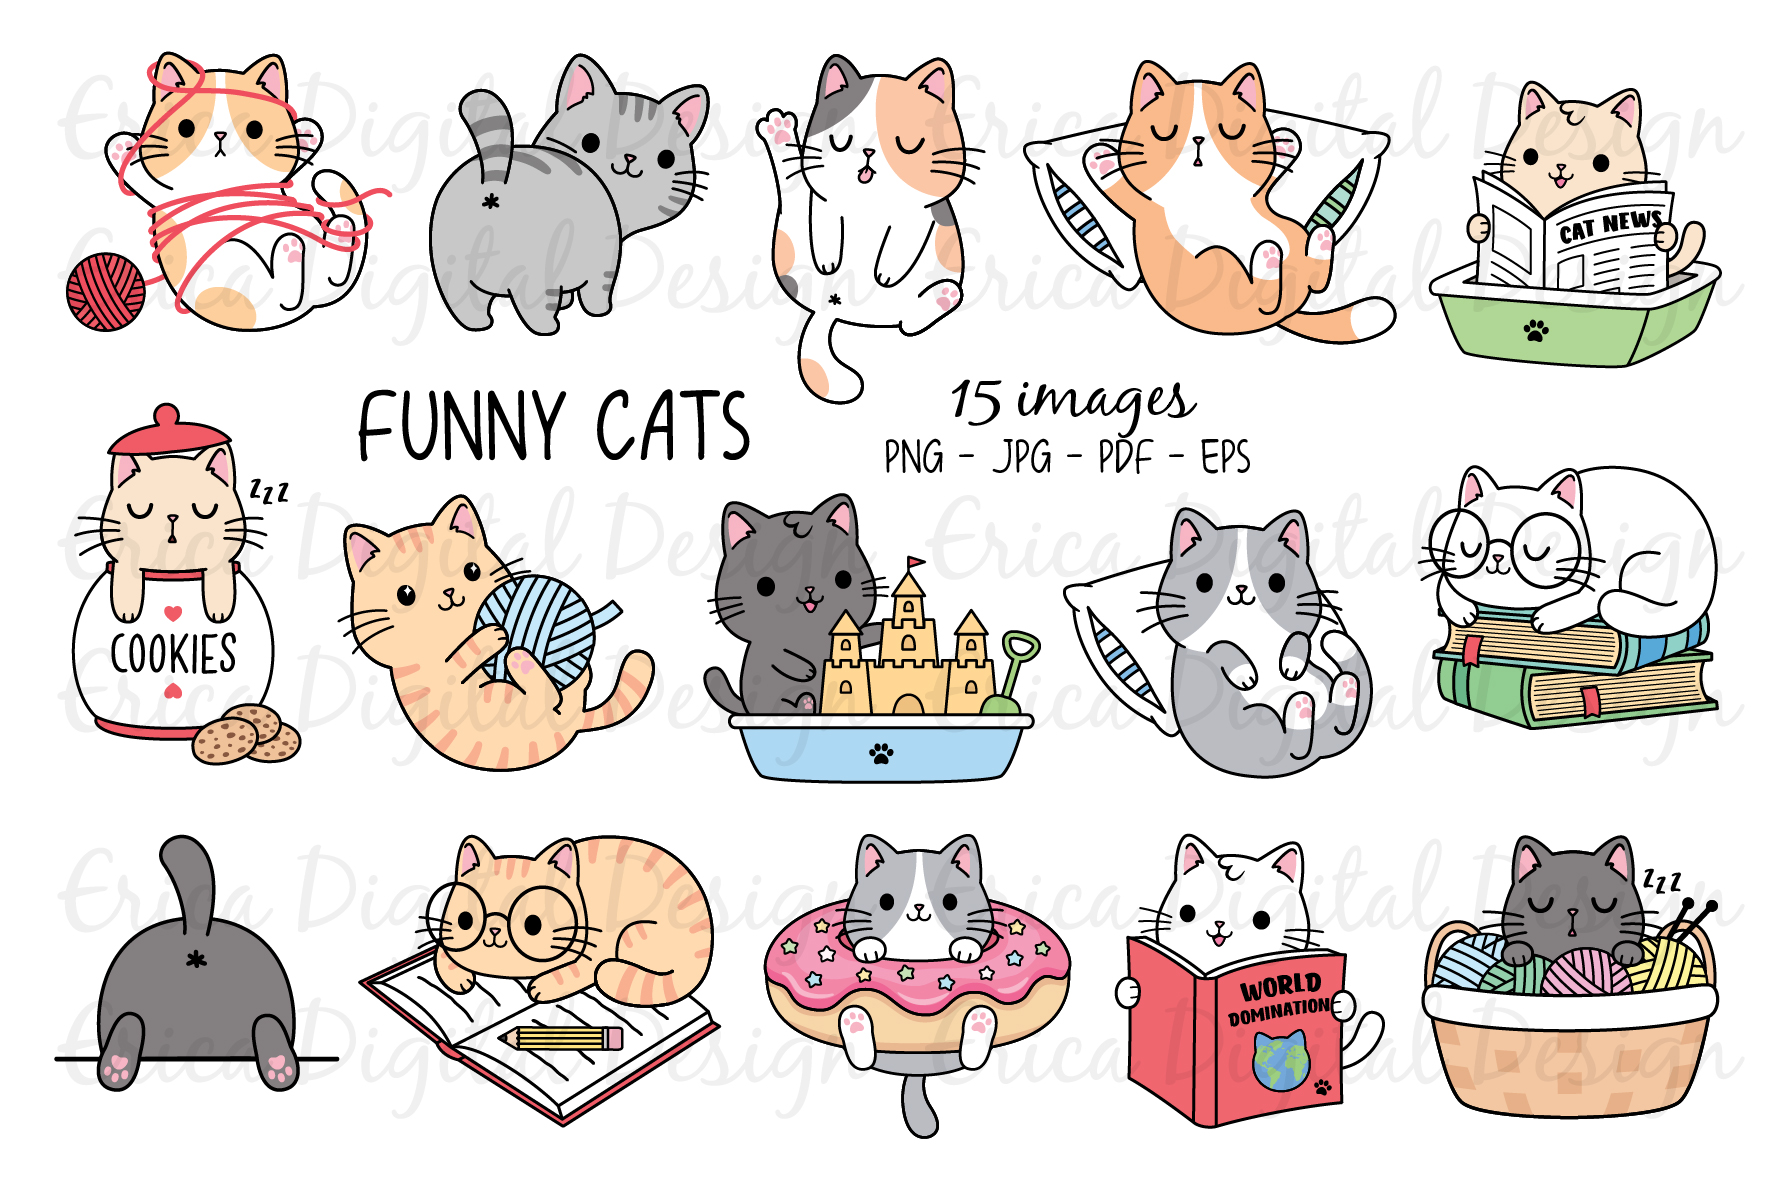 Funny Cats Clipart set - 15 cute images